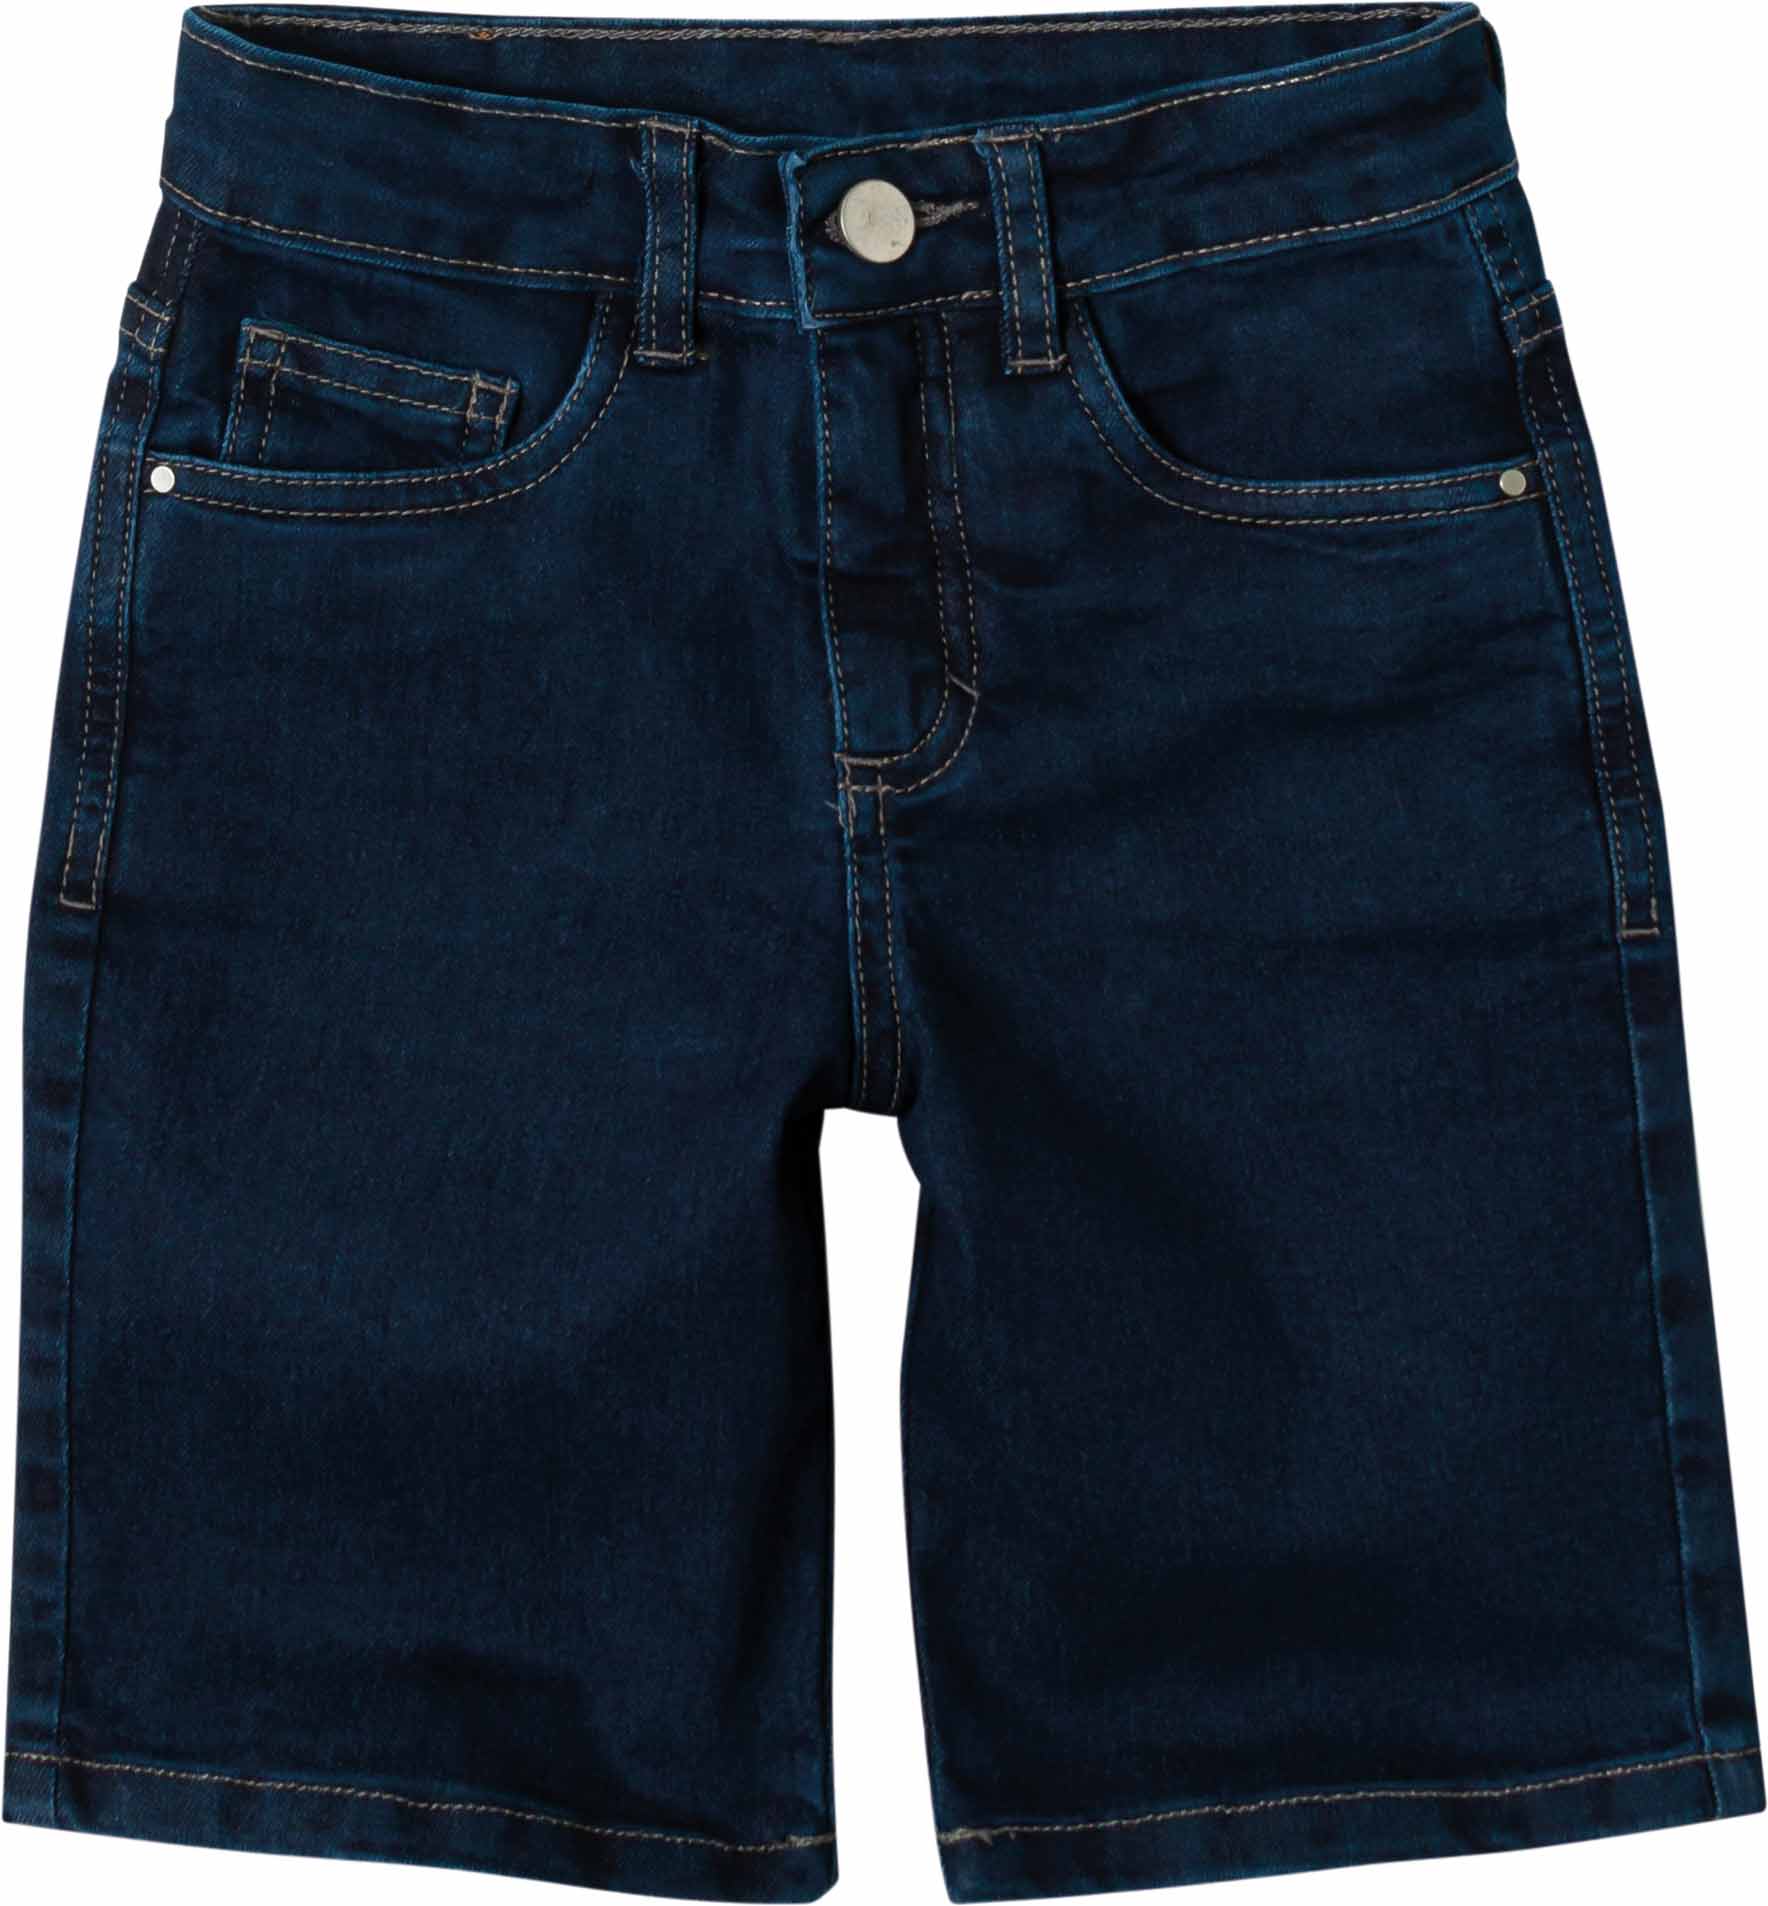 Shorts Bermuda Jeans Infantil Masculina Malwee